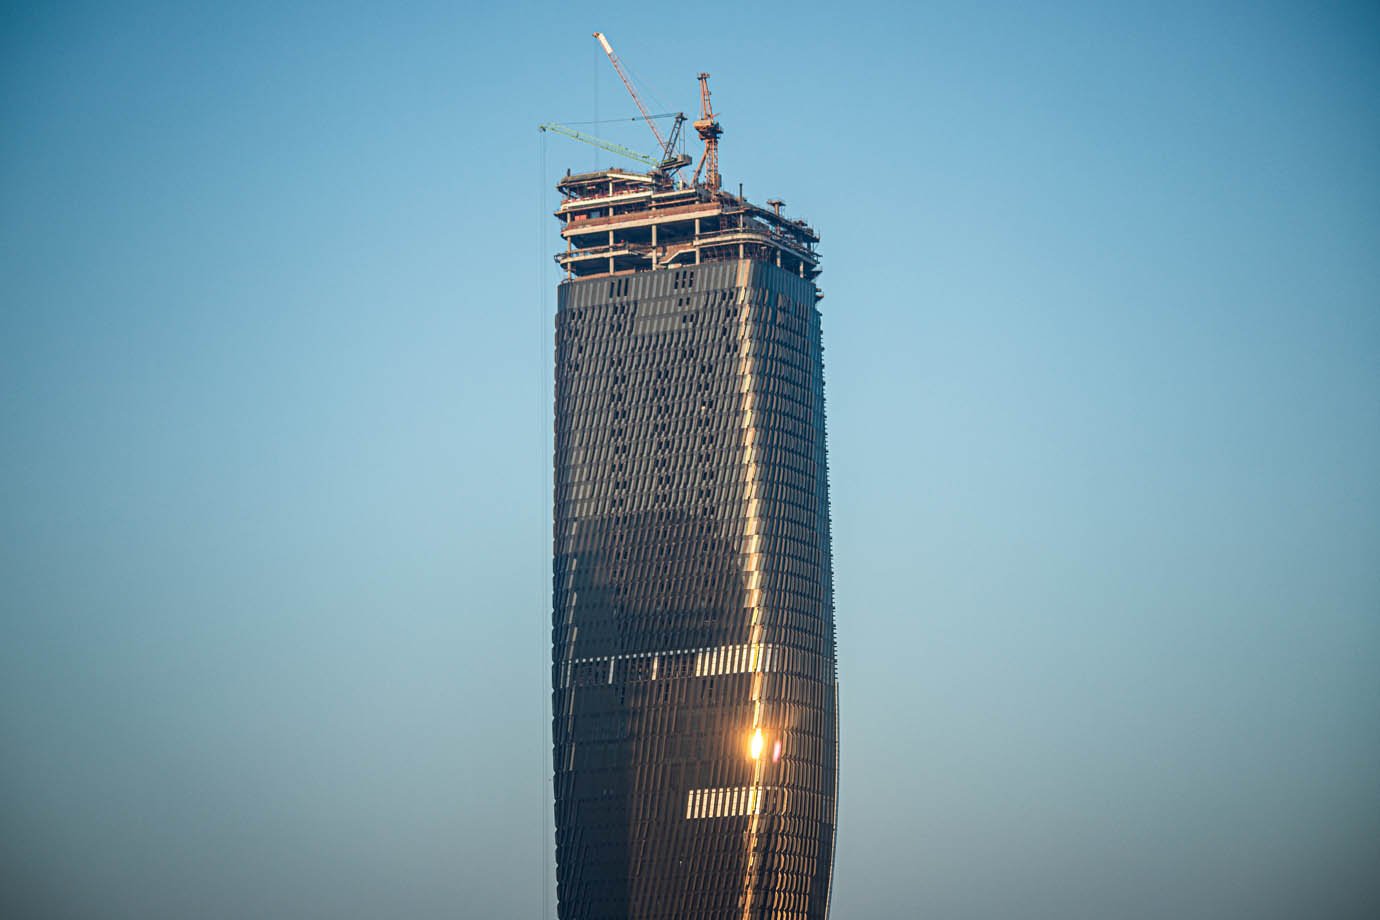 Dubai, arquitetura dos predios

Foto: Leandro Fonseca
Data: dezembro 2023